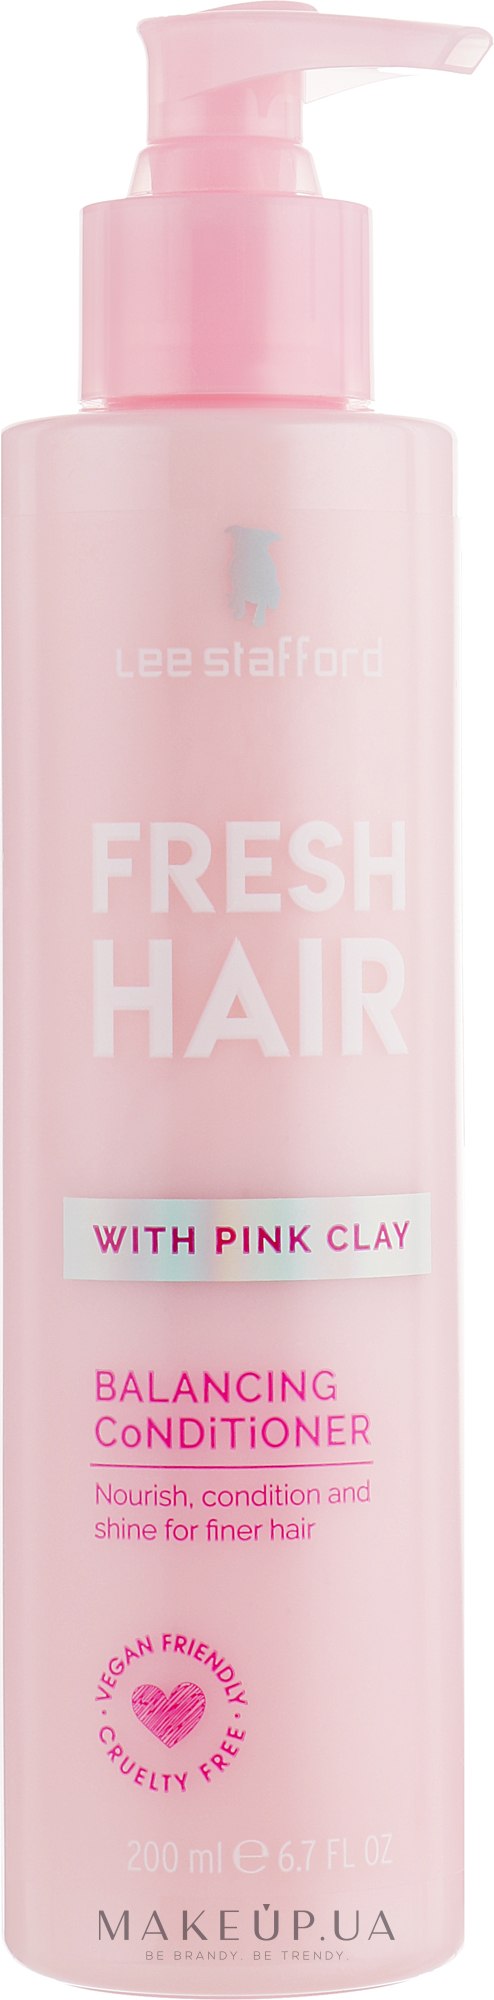 Балансуючий кондиціонер з рожевою глиною - Lee Stafford Fresh Hair Balancing Conditioner — фото 200ml